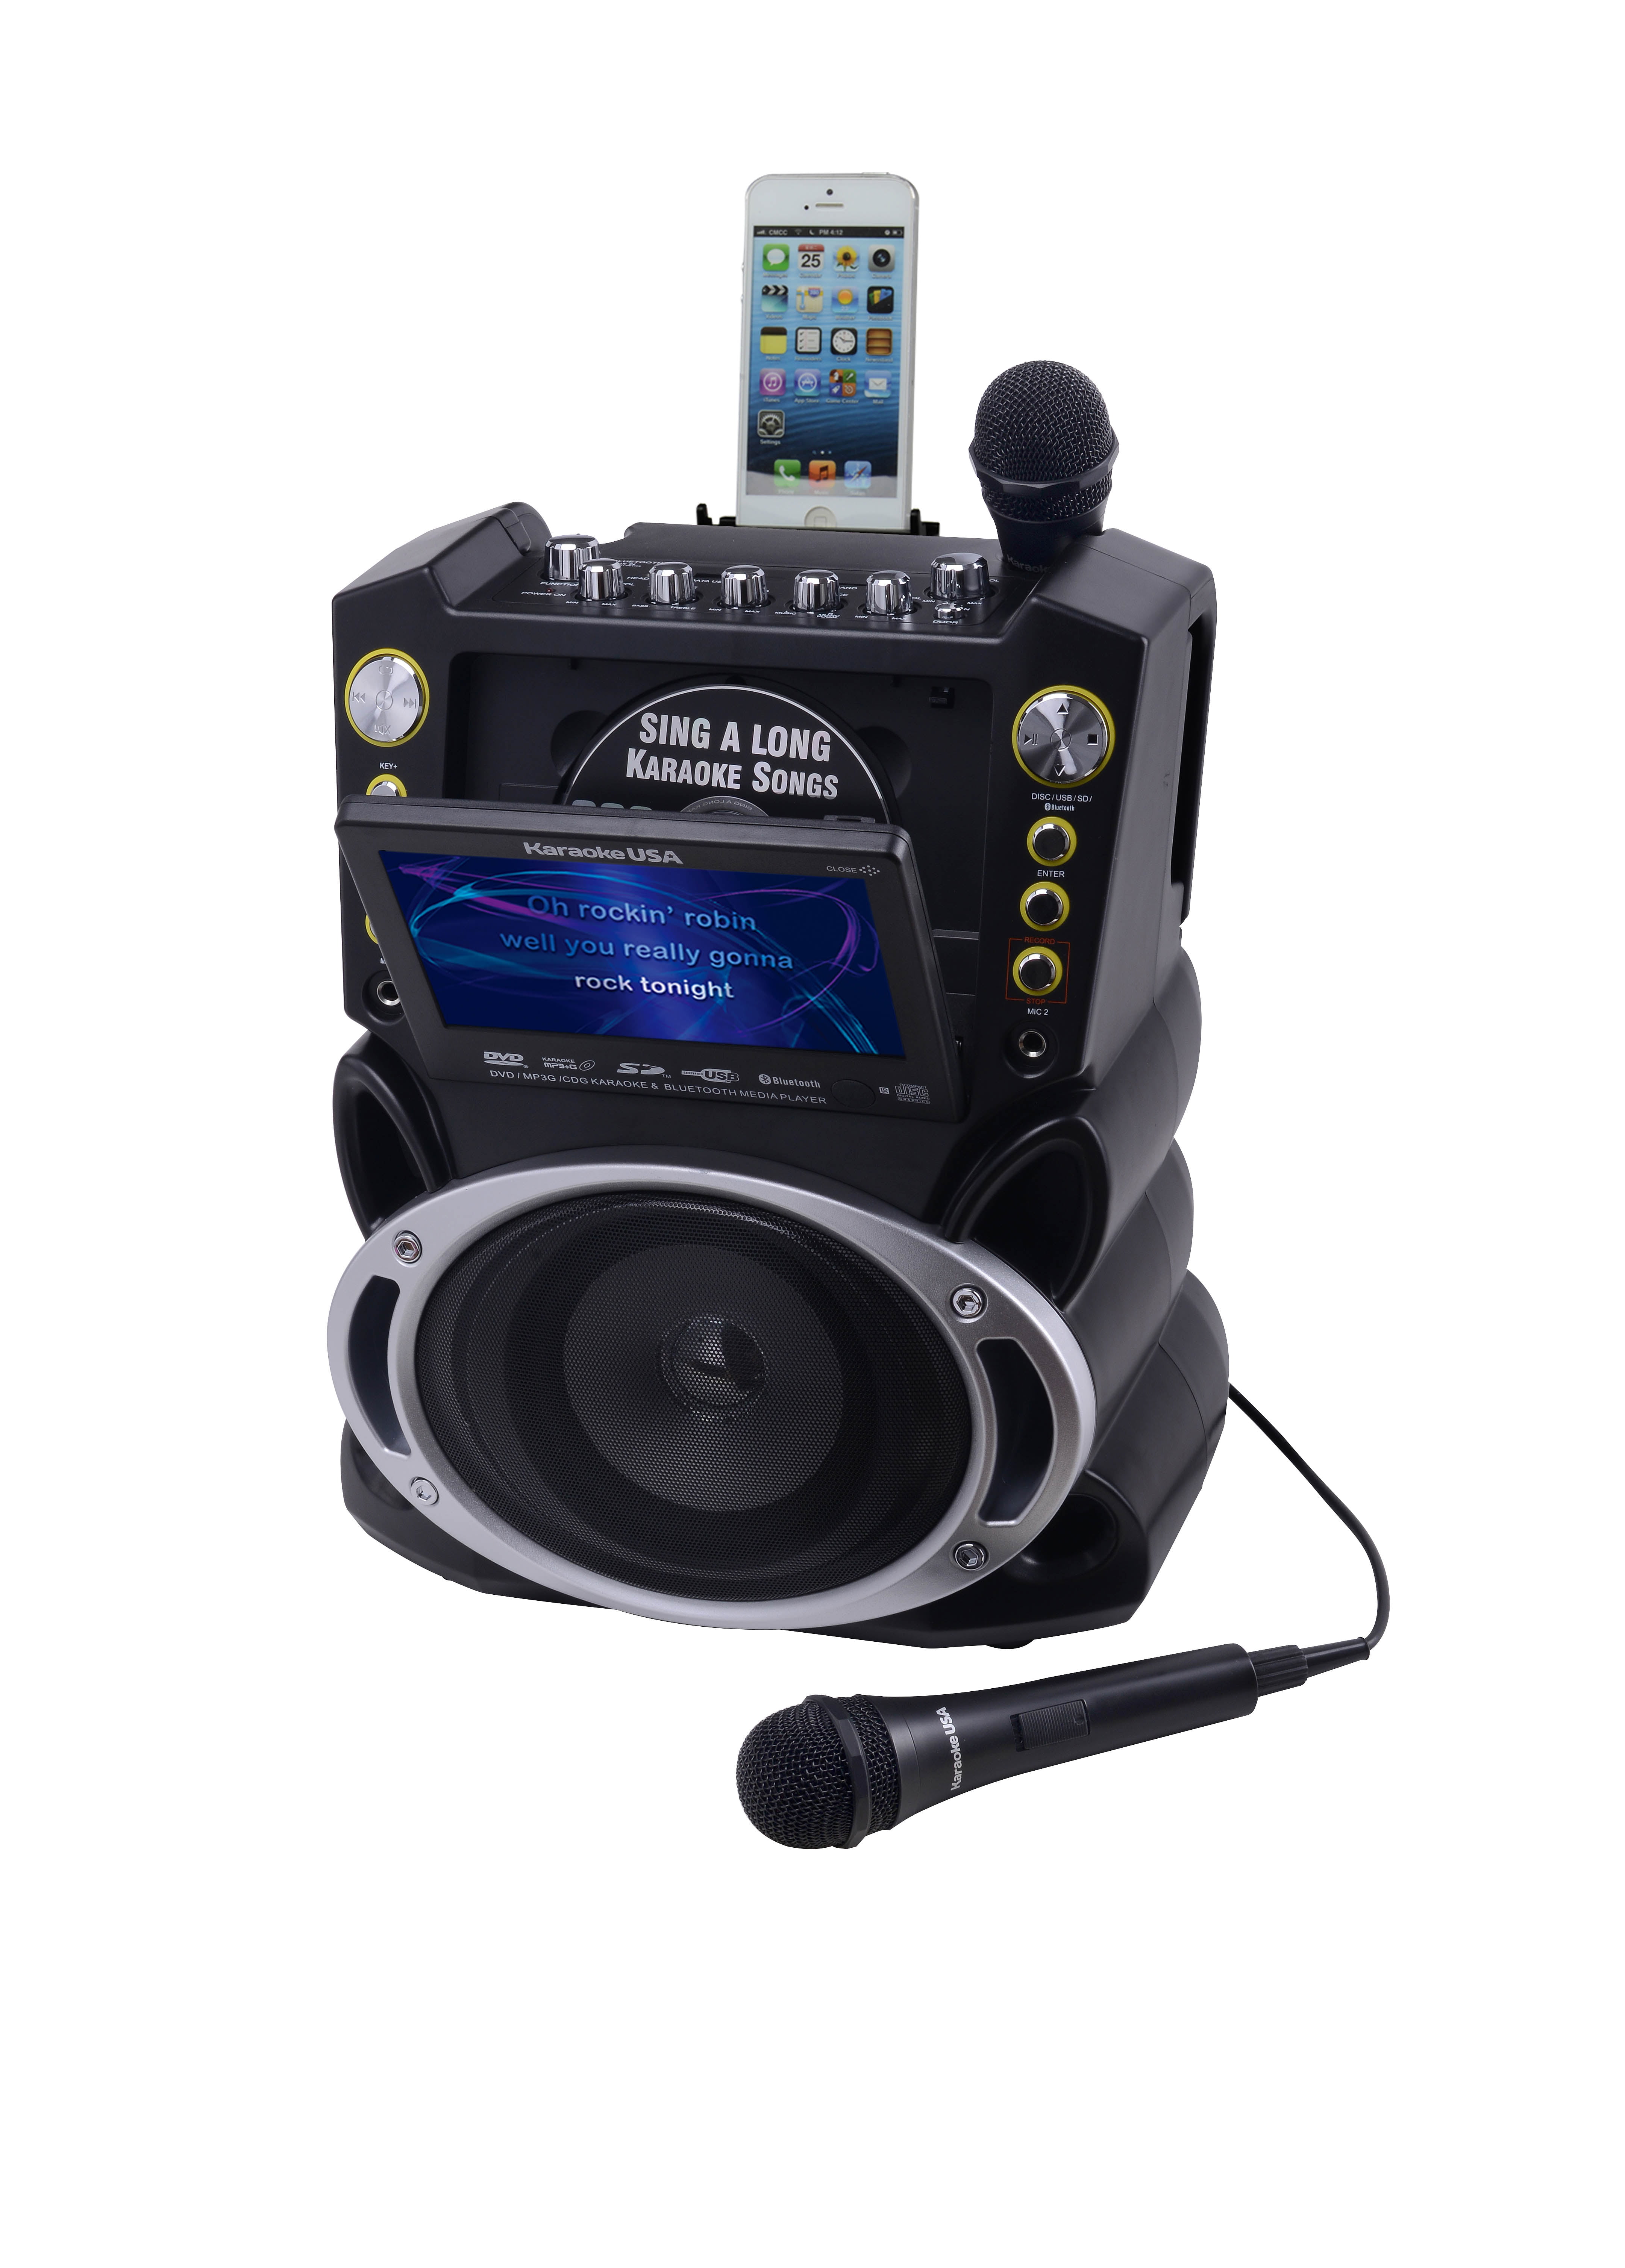 Karaoke GF842 DVD/CDG/MP3G Karaoke System with 7 TFT Color Screen Record Bluetooth and LED Sync Lights with Disney Karaoke Series Moana 